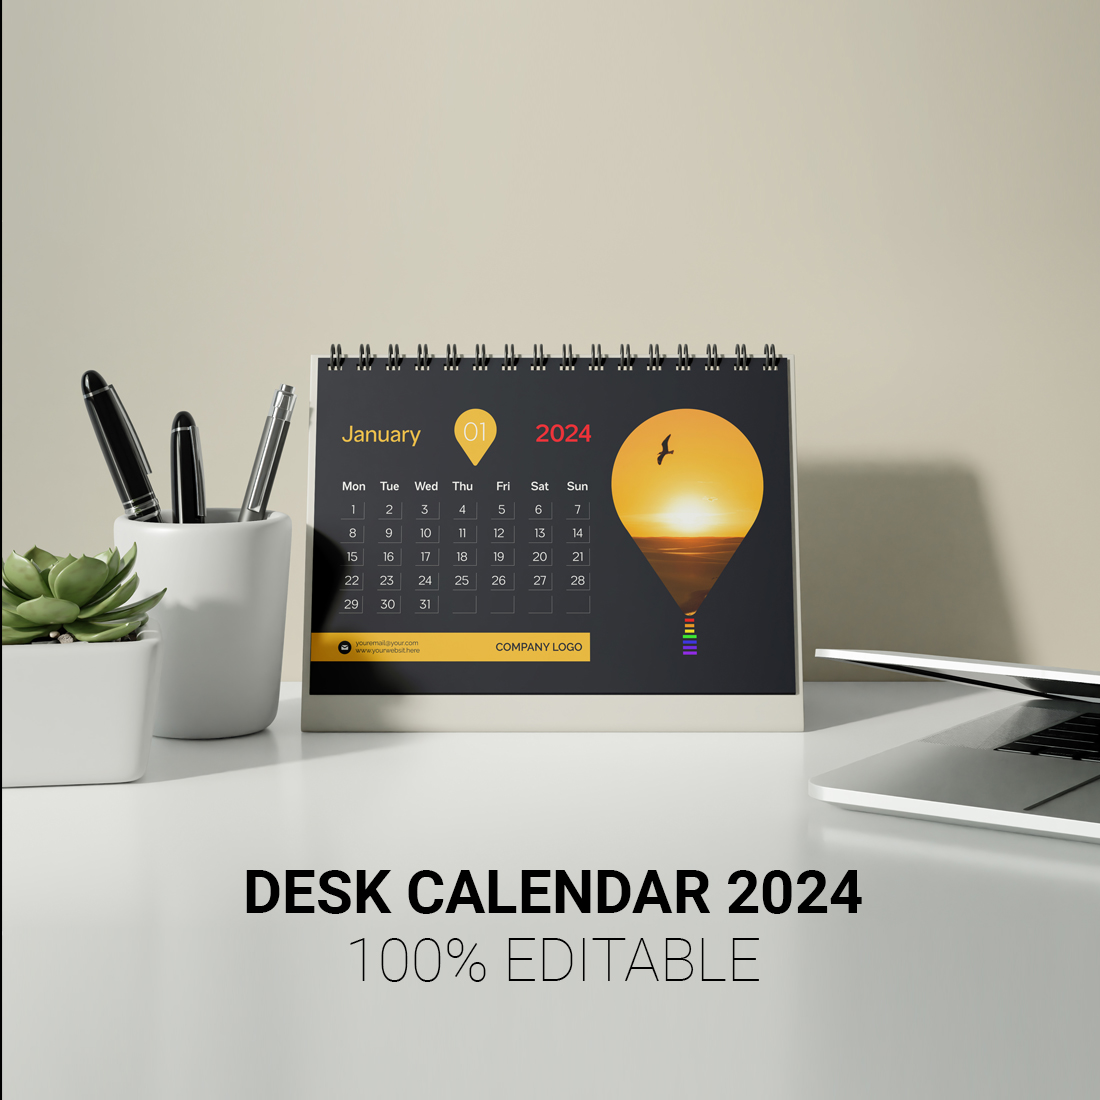 Desk Calendar Design 2024 preview image.